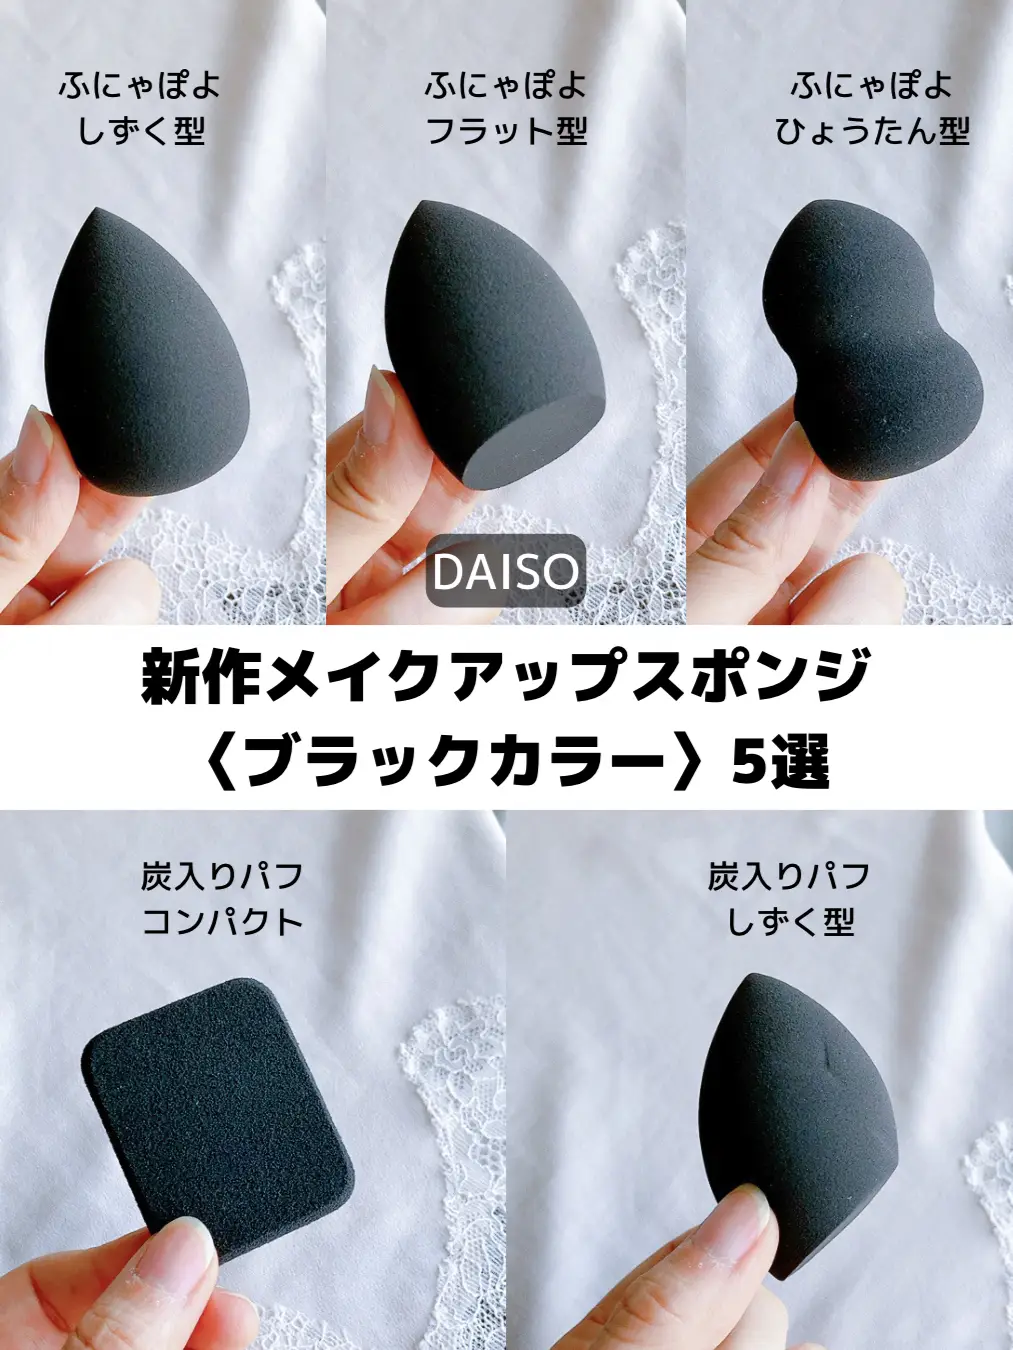 Daiso Black Sponges